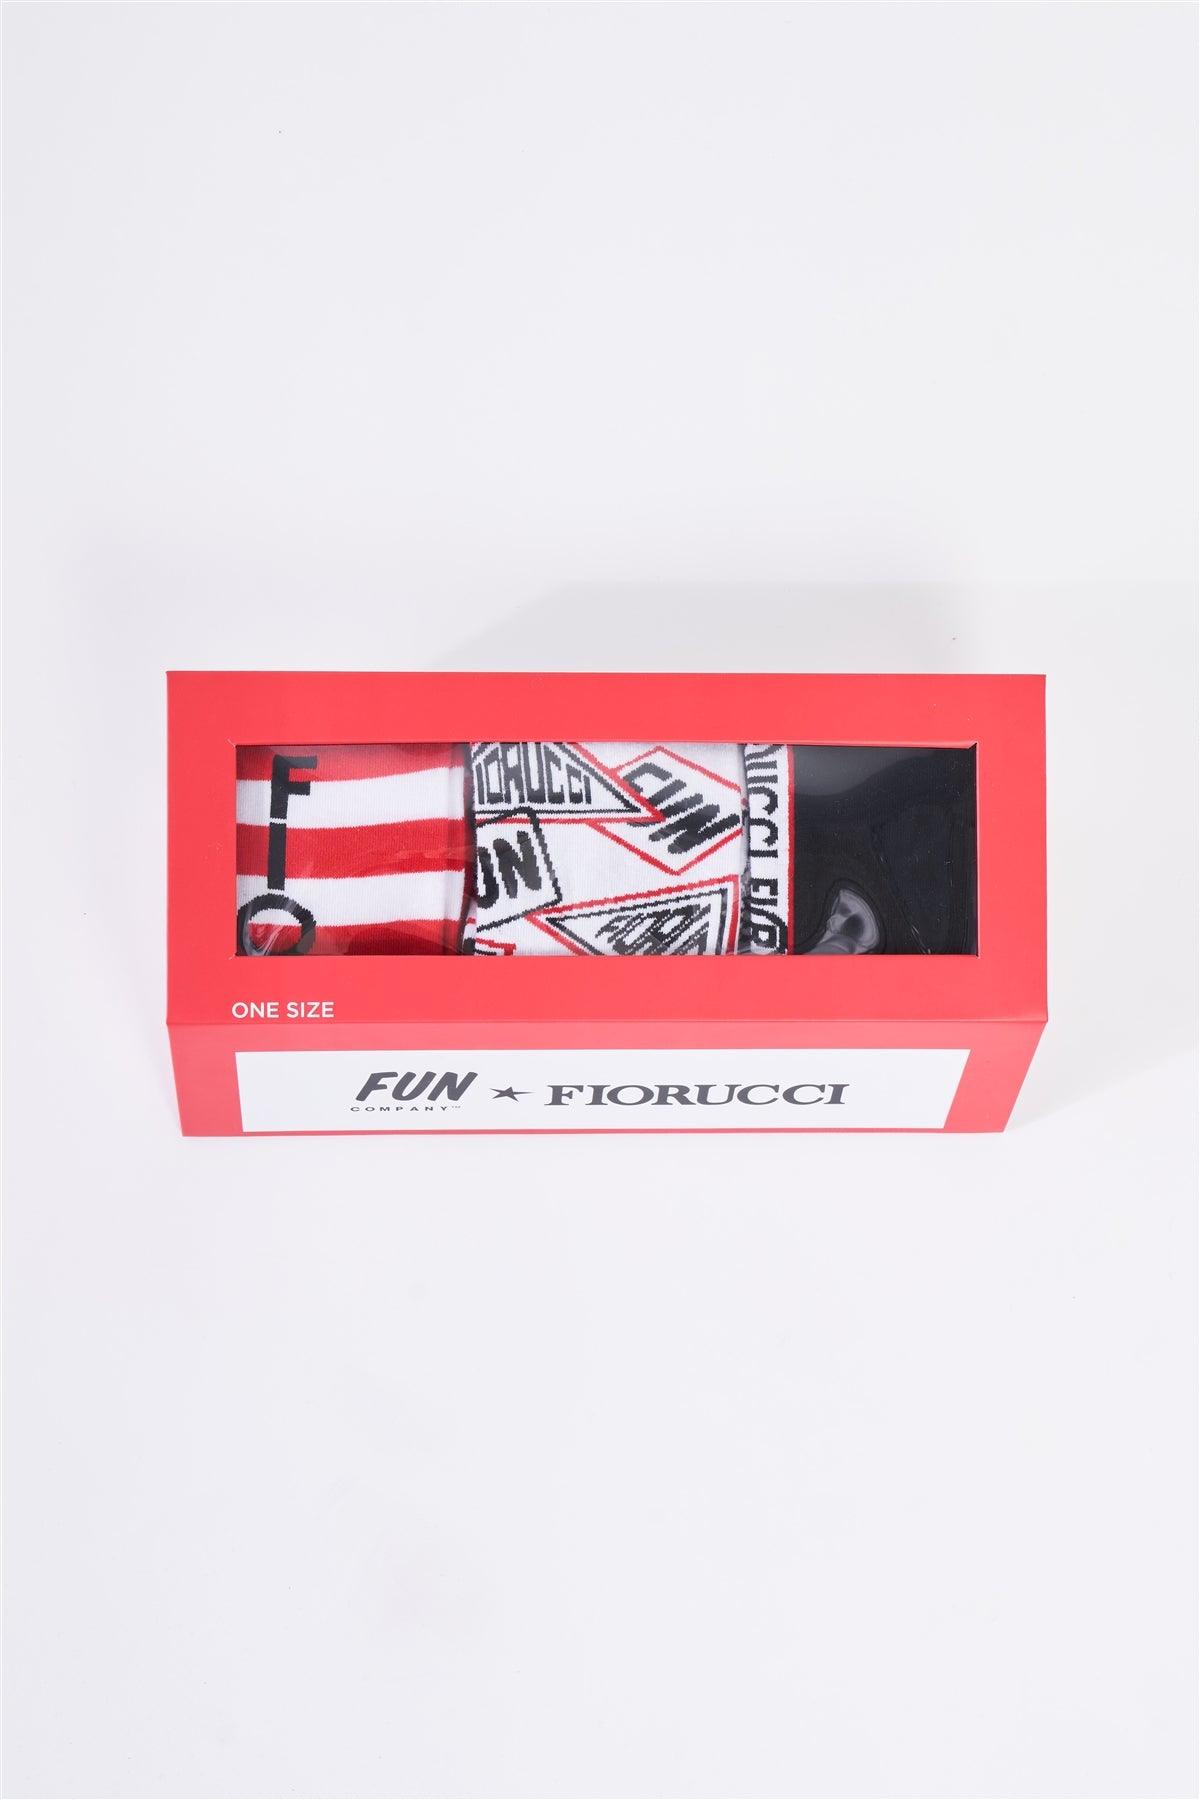 Fiorucci Fun White & Red 3 Pairs Socks Gift Box Set